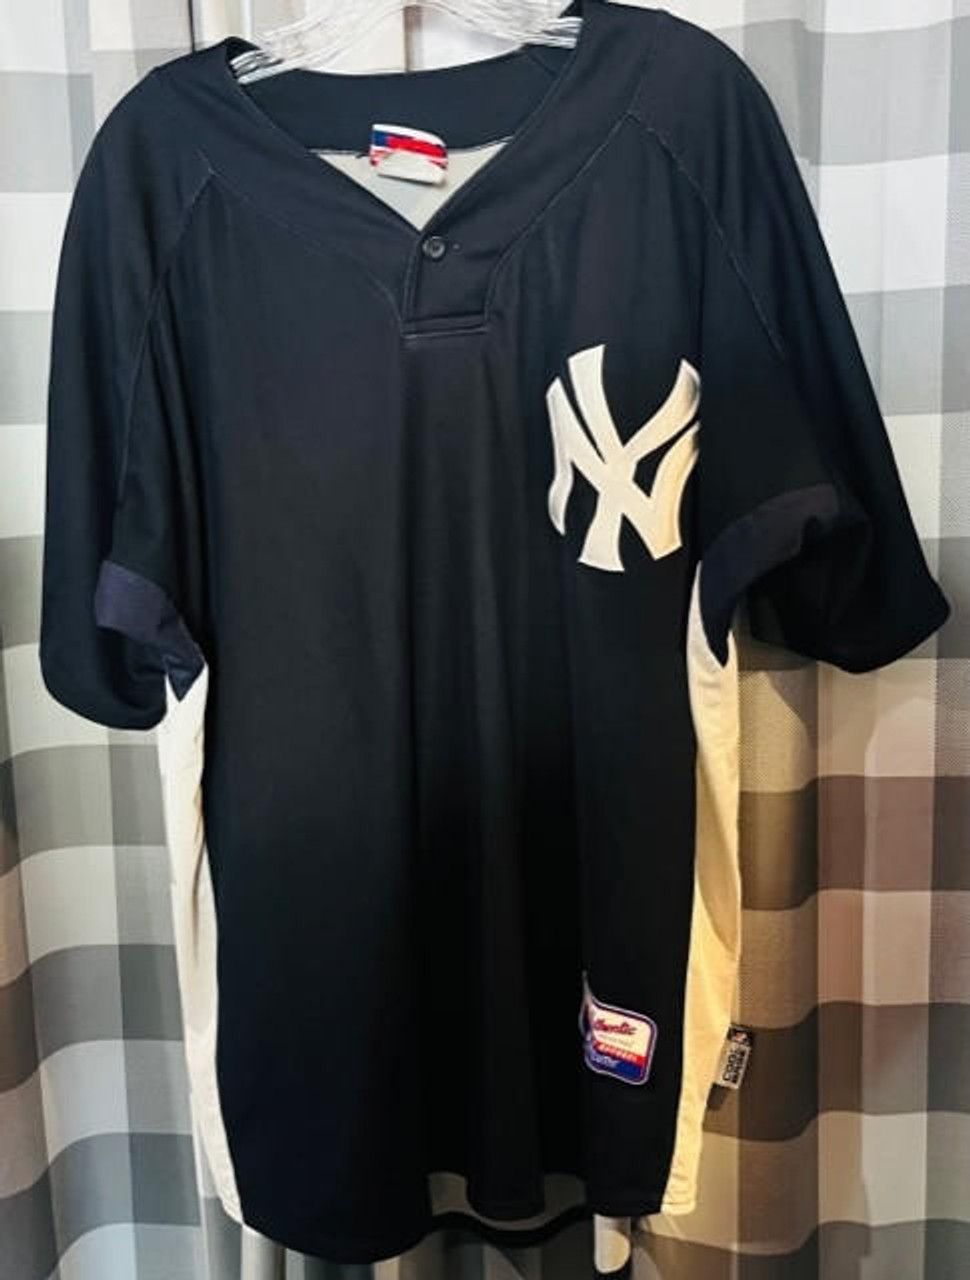 Majestic New York Yankees Fashion Jersey XL